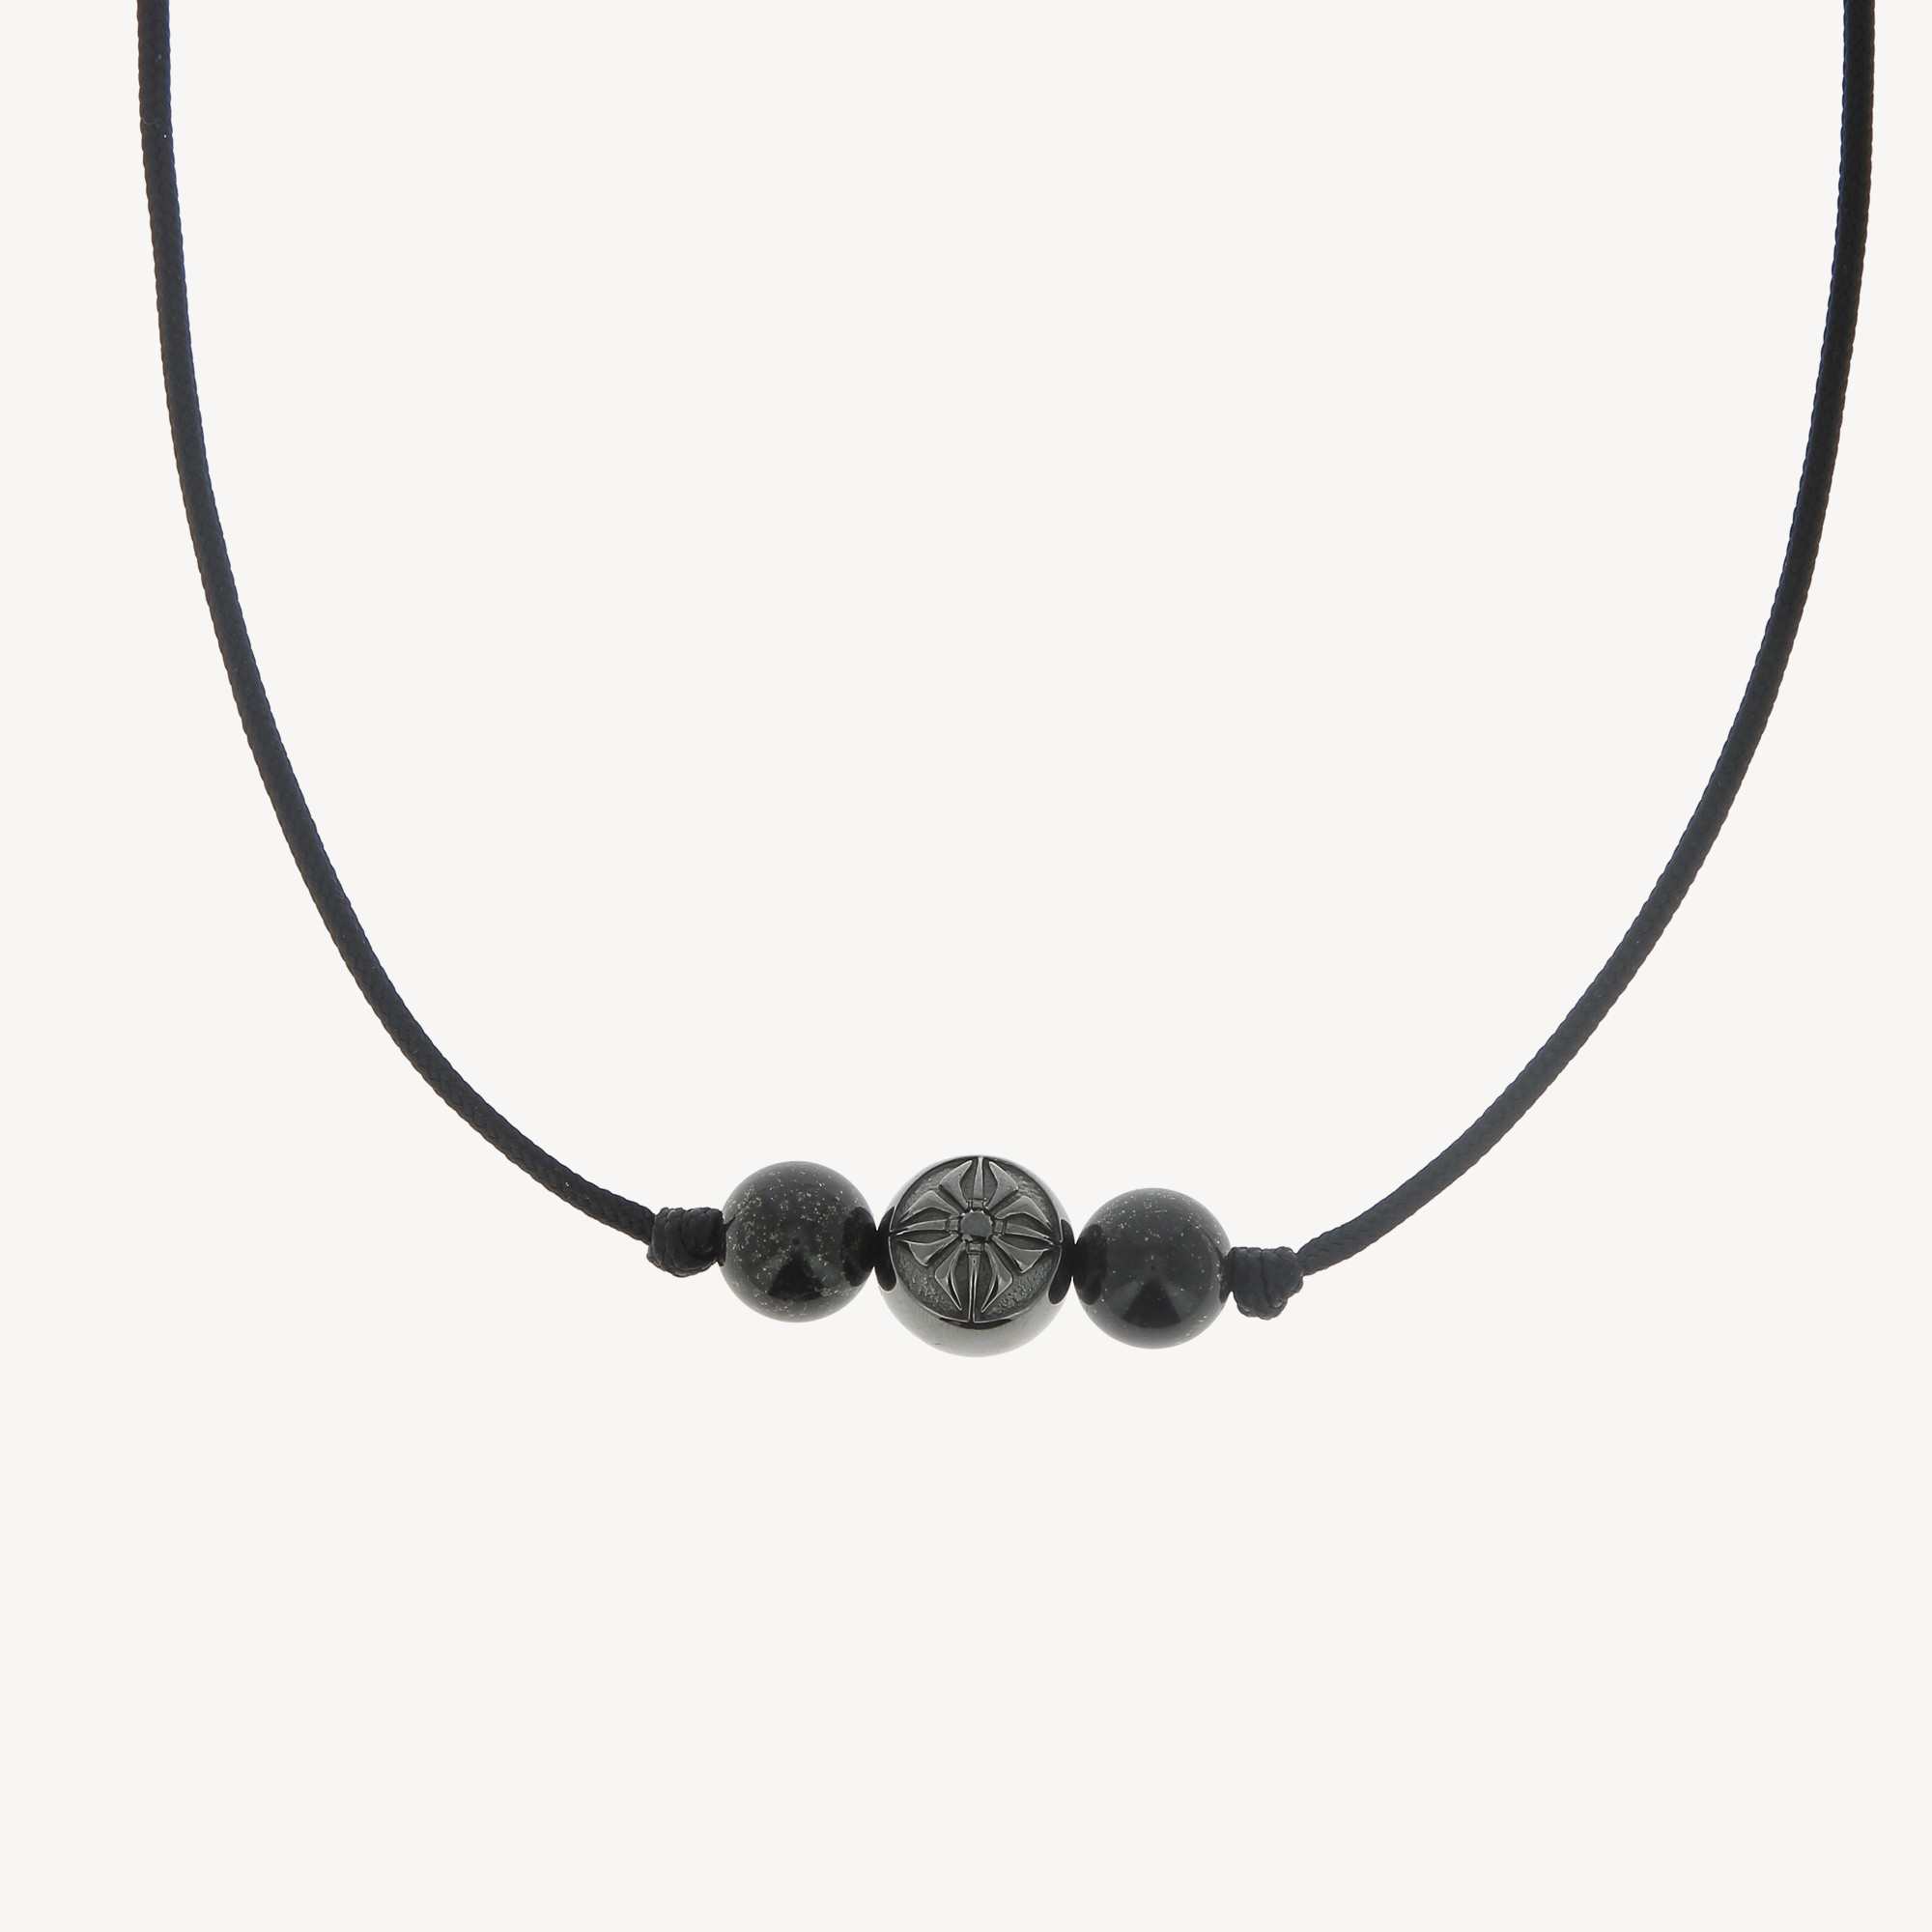 2 Black Jade Beads Necklace